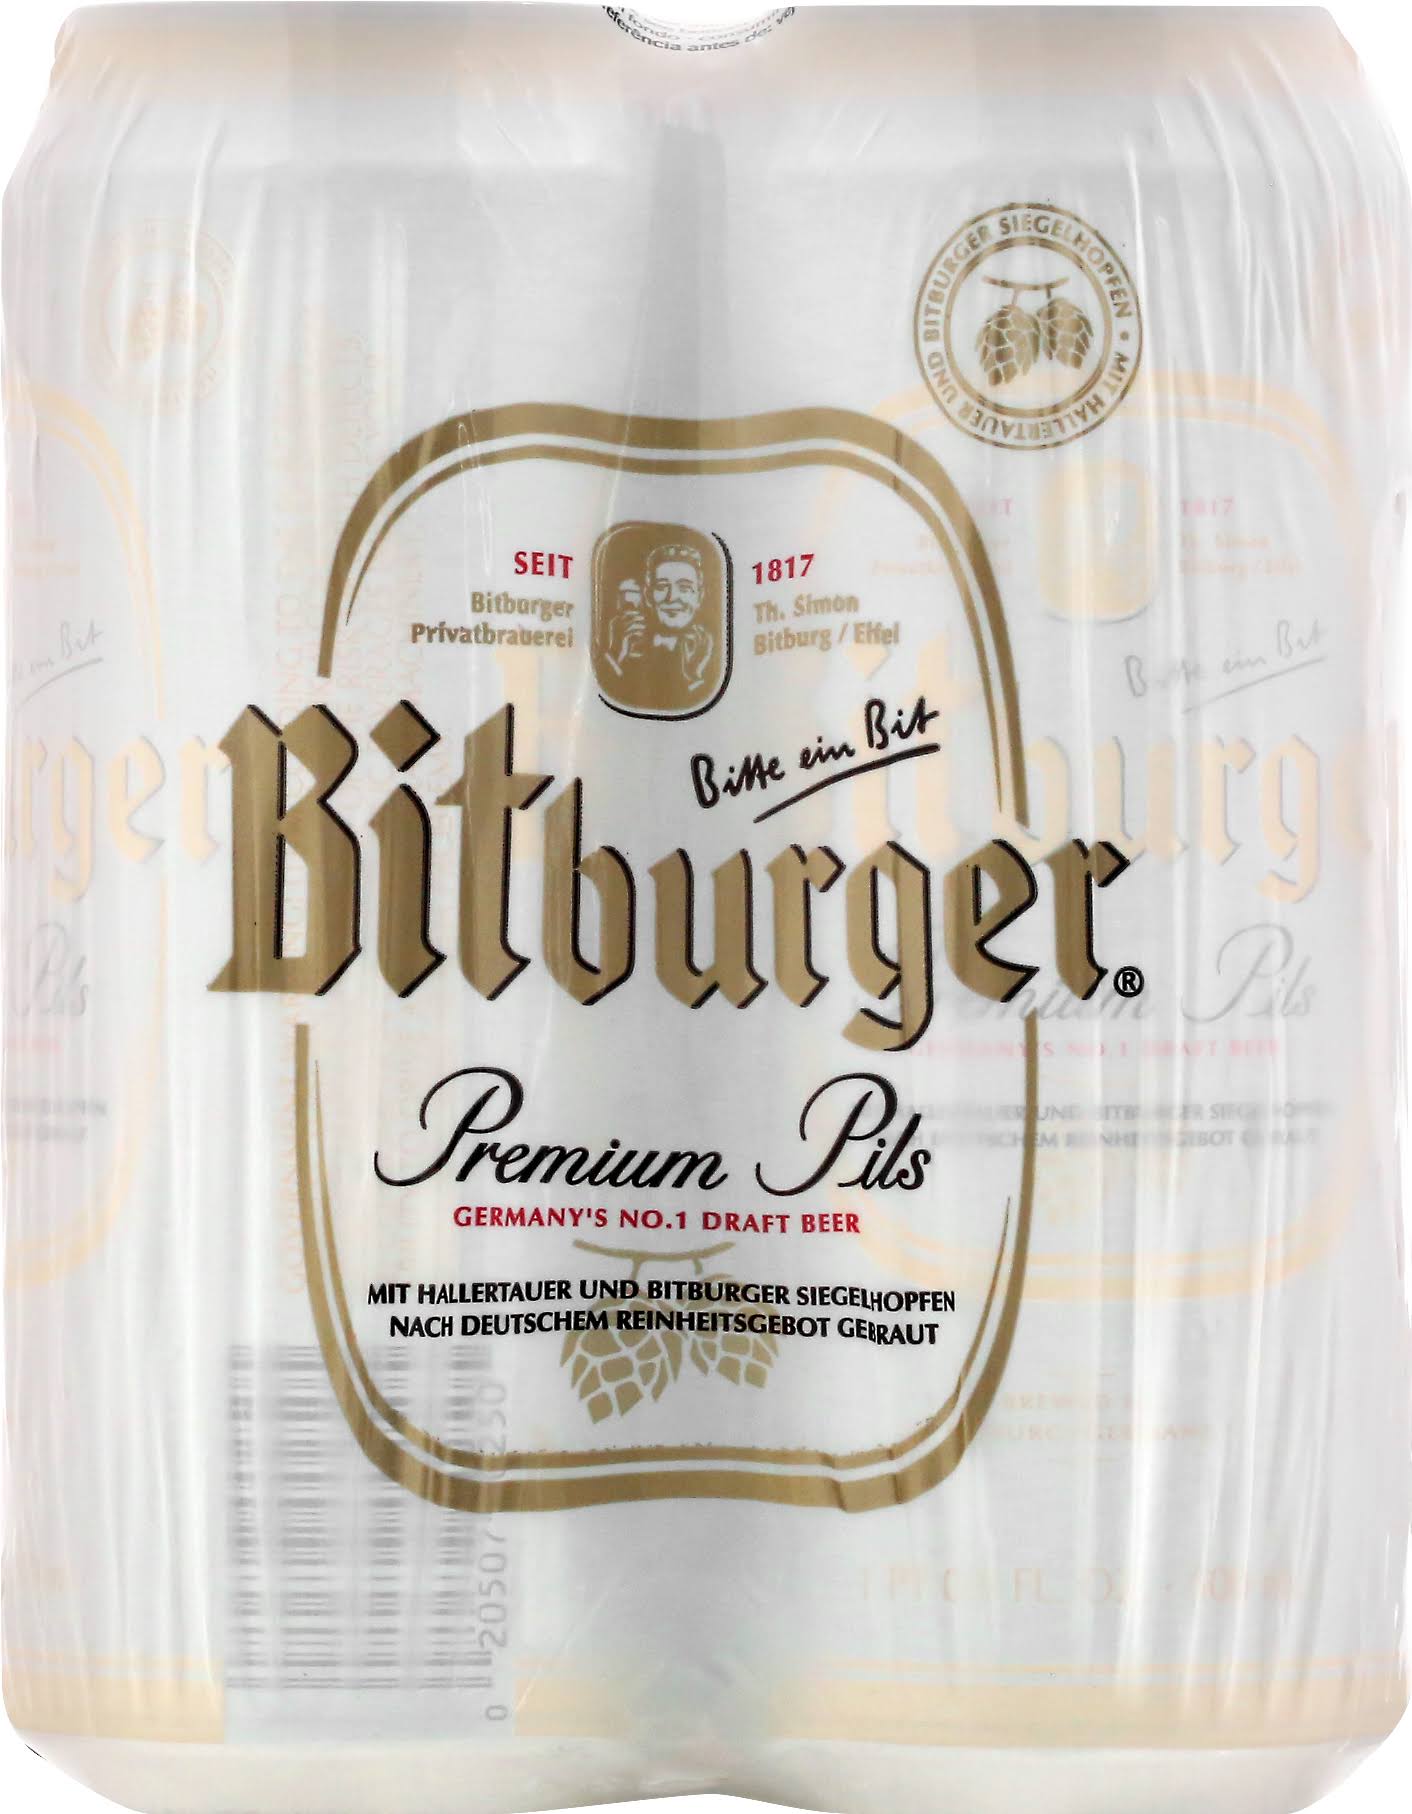 Bitburger Beer, Premium Pils - 4 pack, 16.9 fl oz